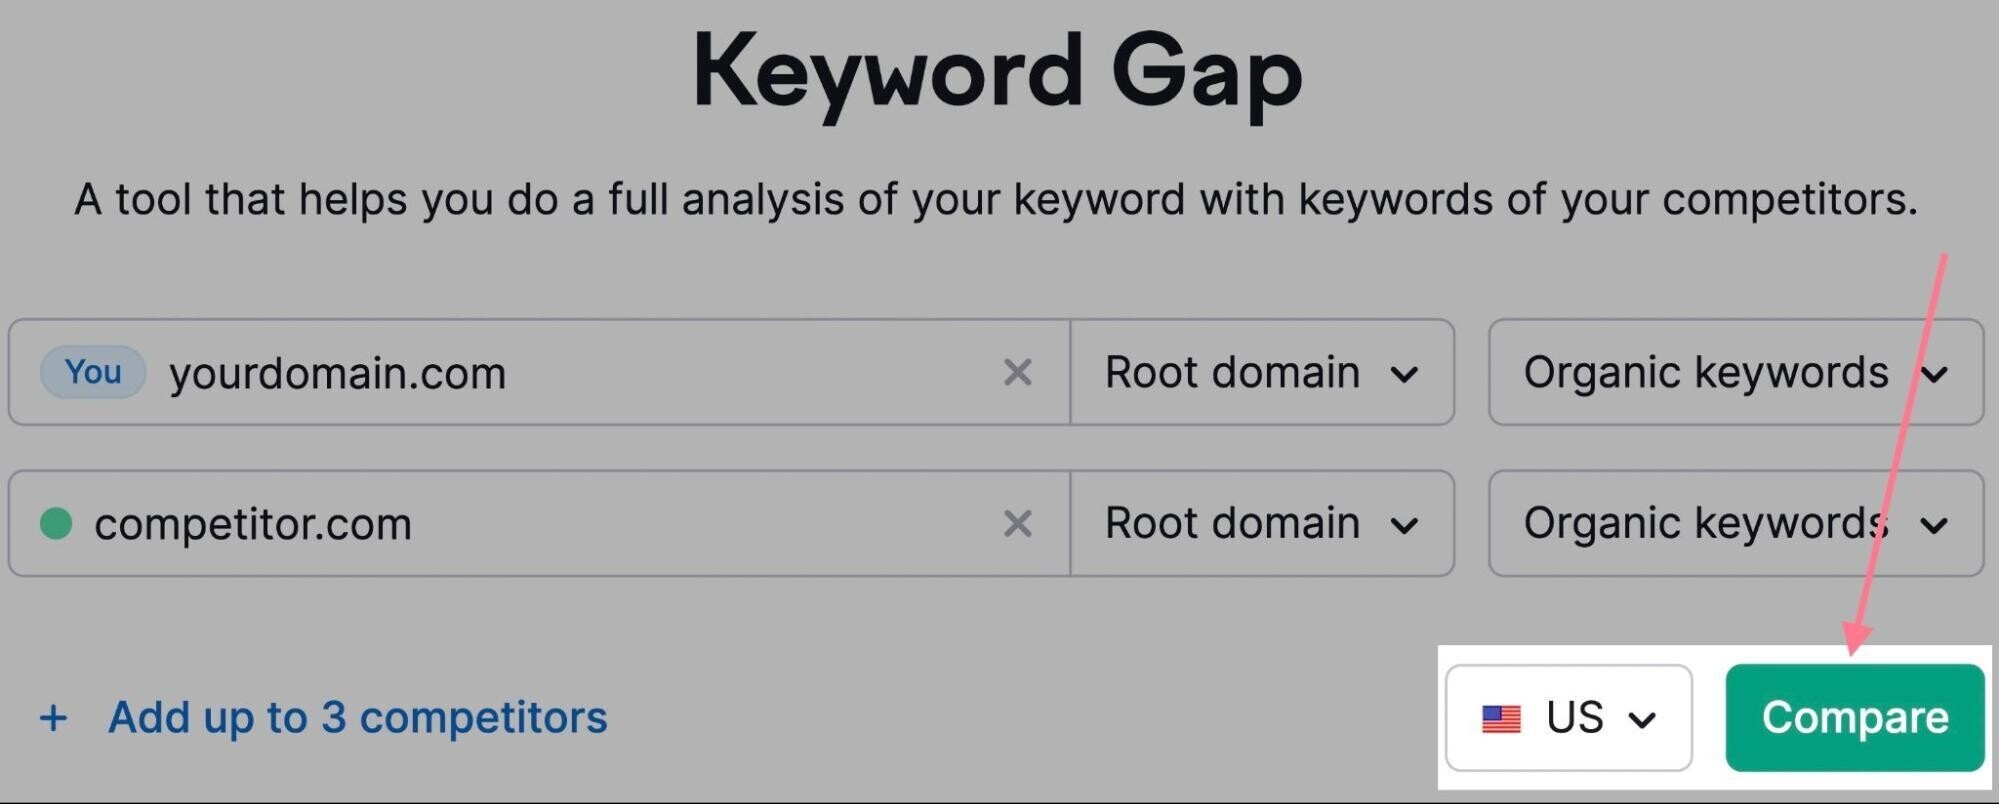 keyword gap tool search